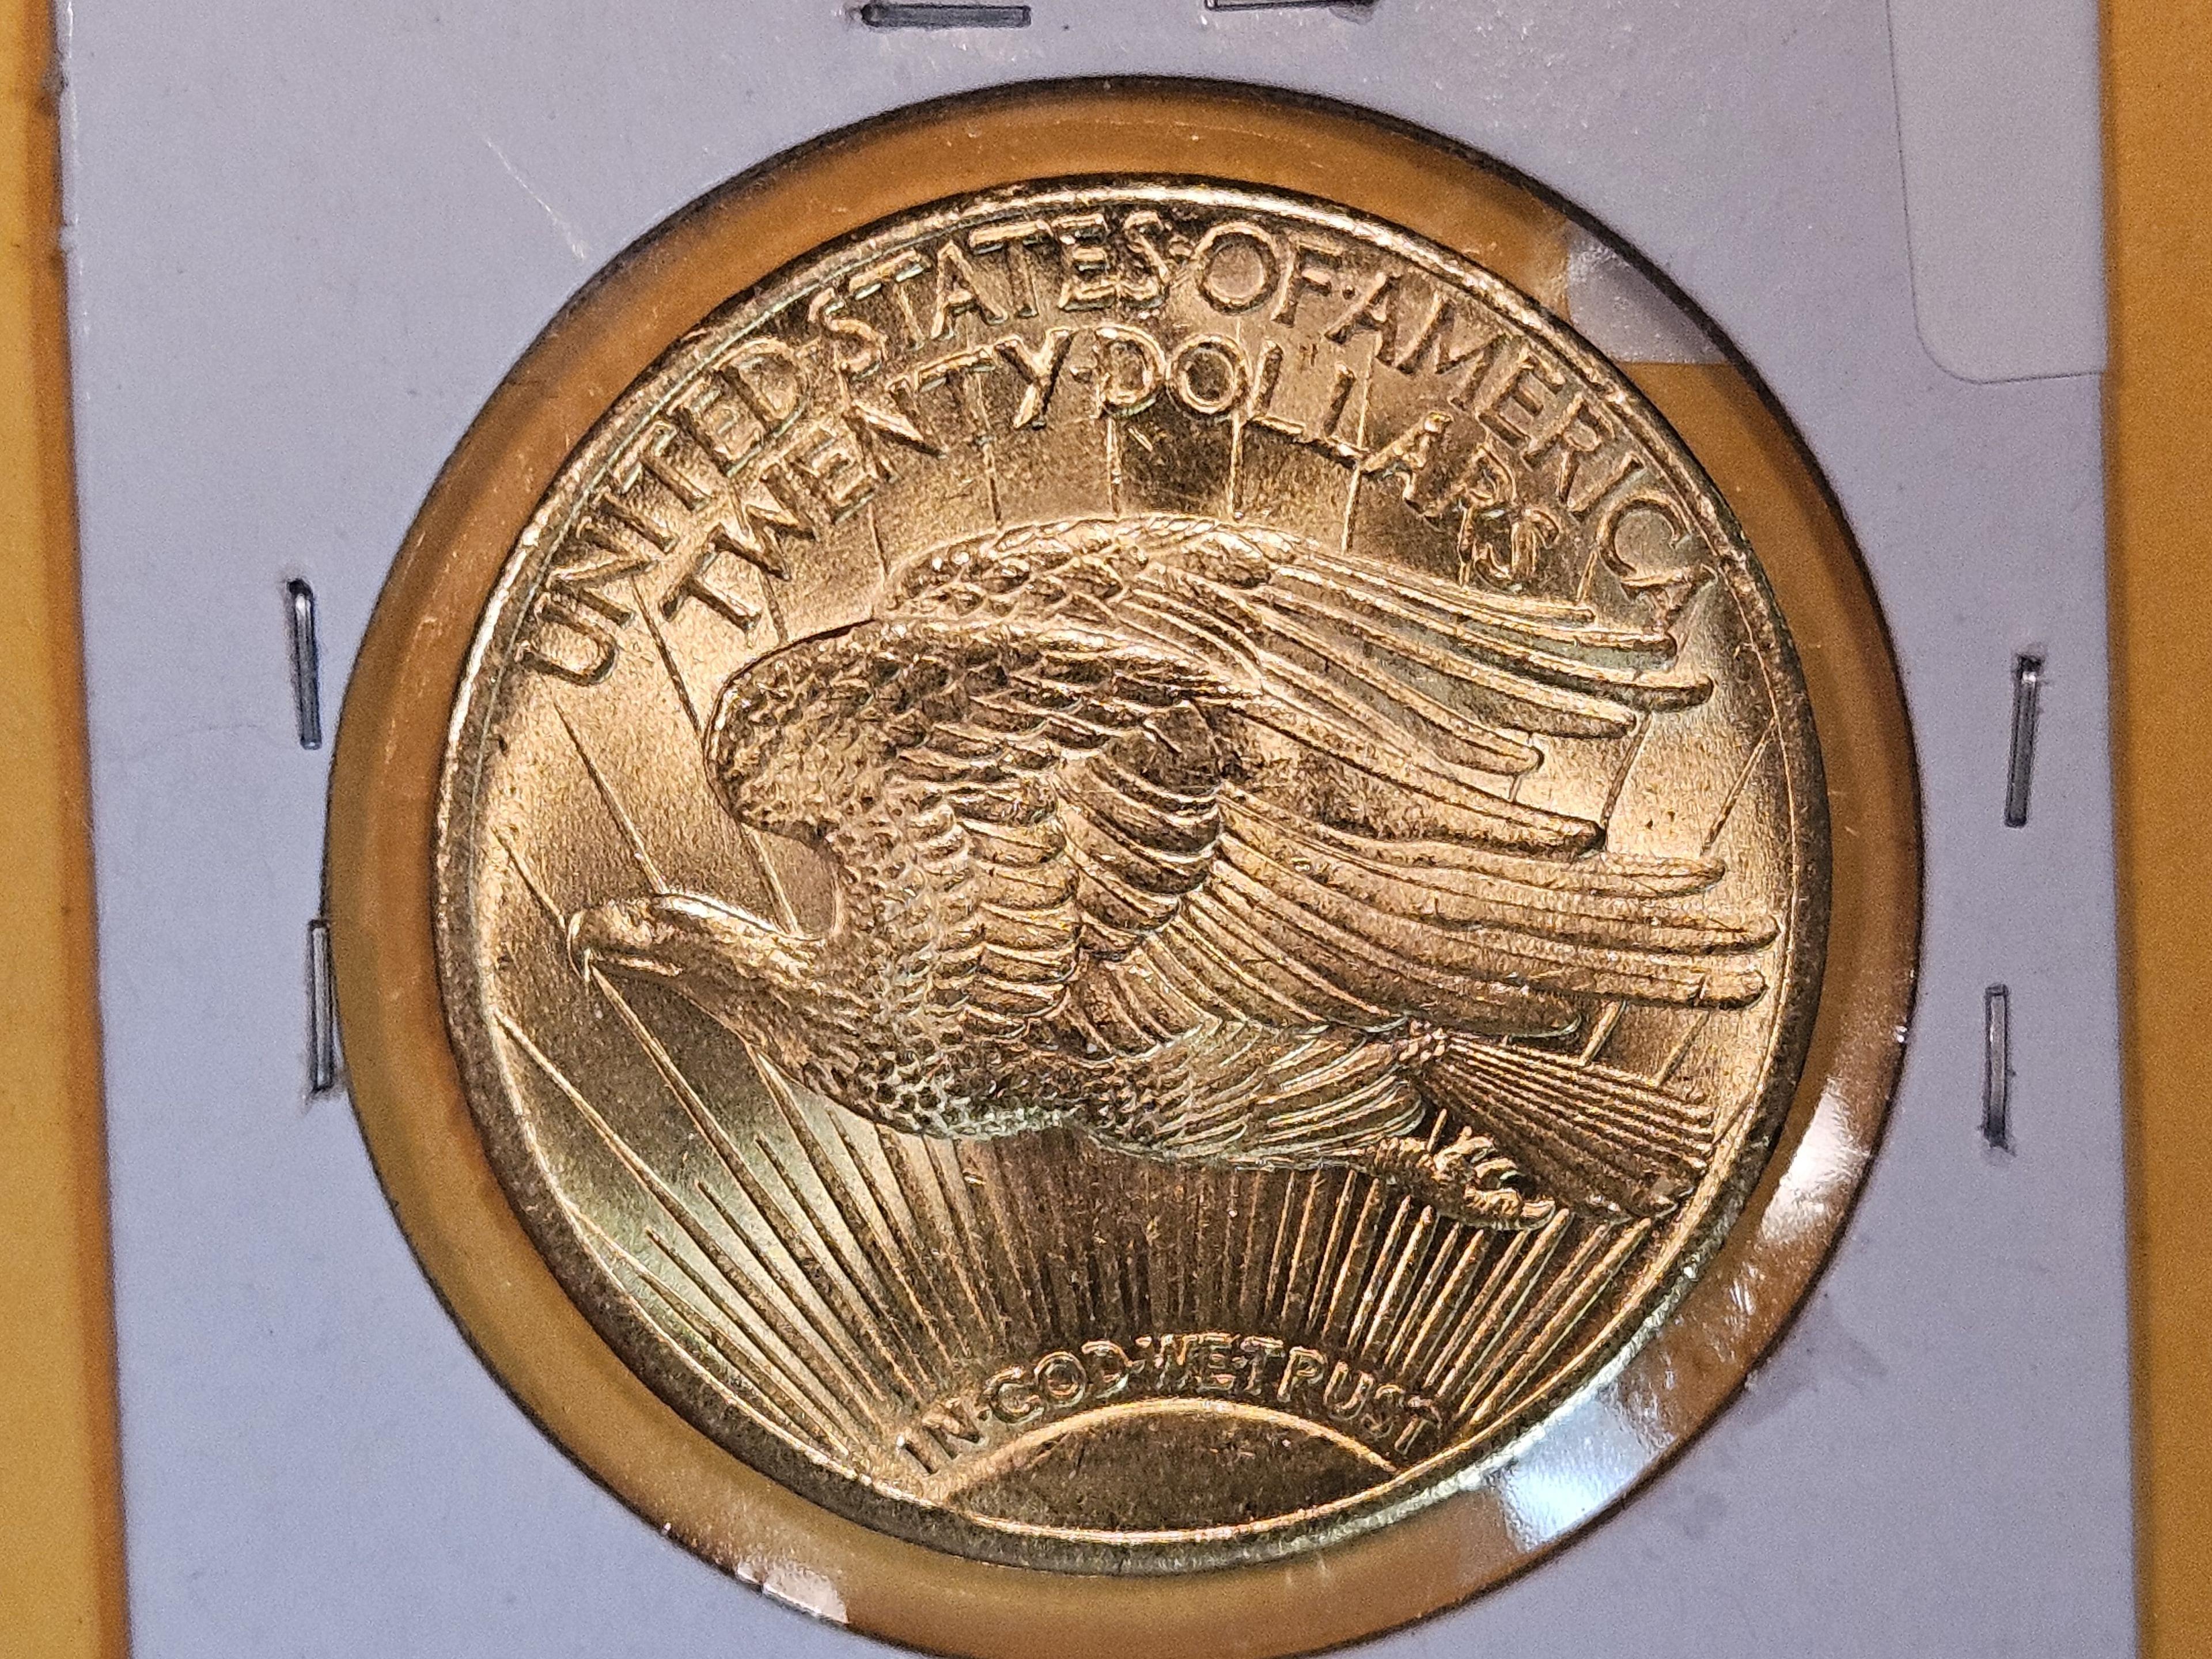 GOLD! Brilliant Uncirculated 1924 Gold Saint Gaudens Double Eagle